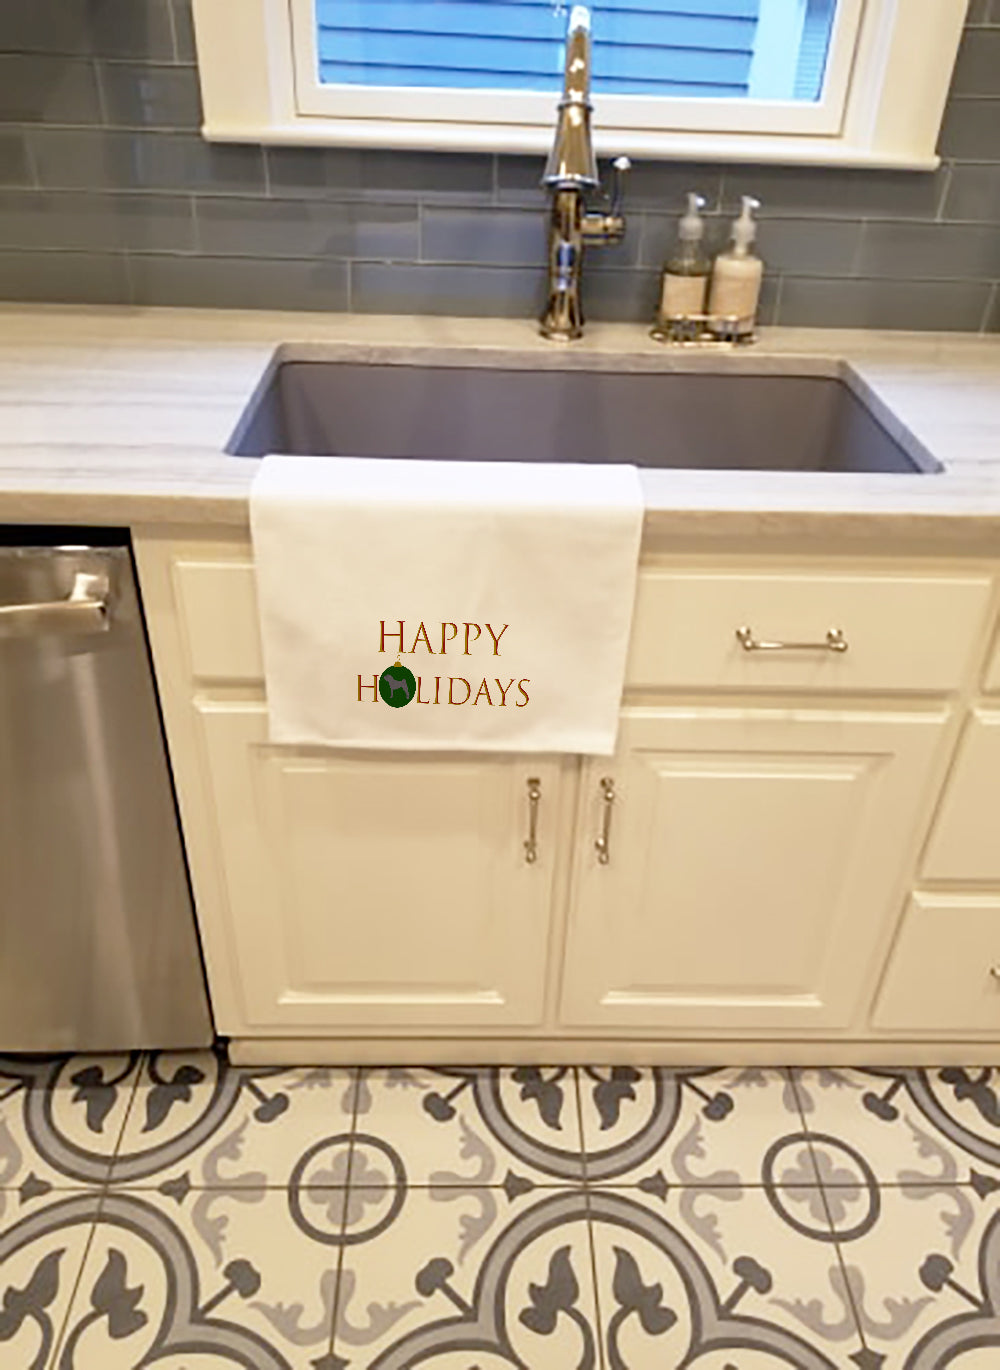 Buy this Shar Pei #1 Happy Holidays White Kitchen Towel Set of 2